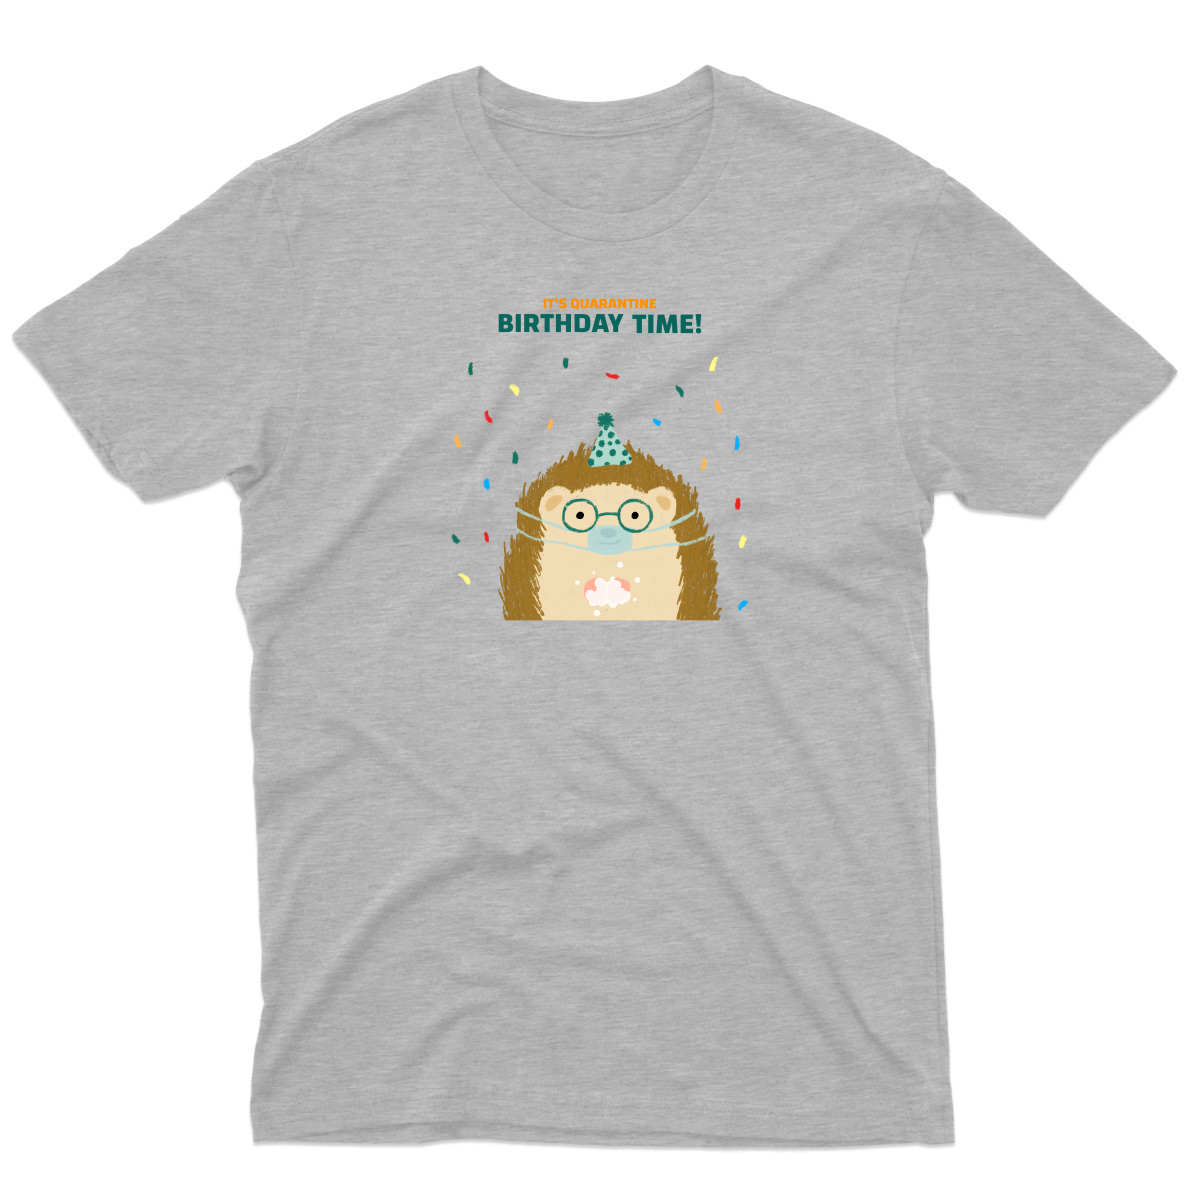 It is quarantine birthday time Men's T-shirt | Gray